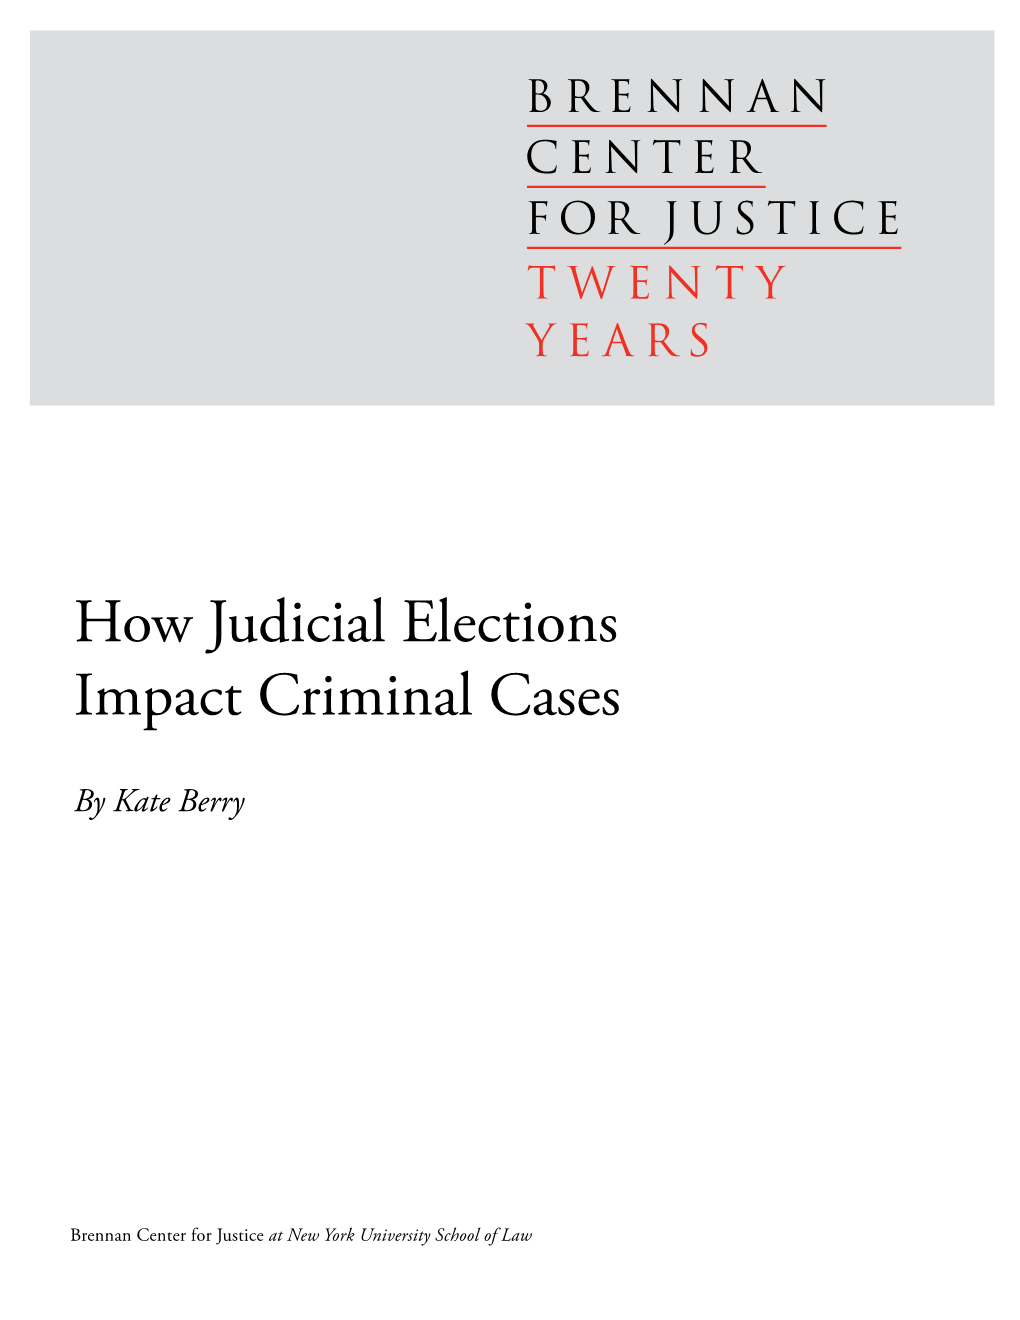 How Judicial Elections Impact Criminal Cases